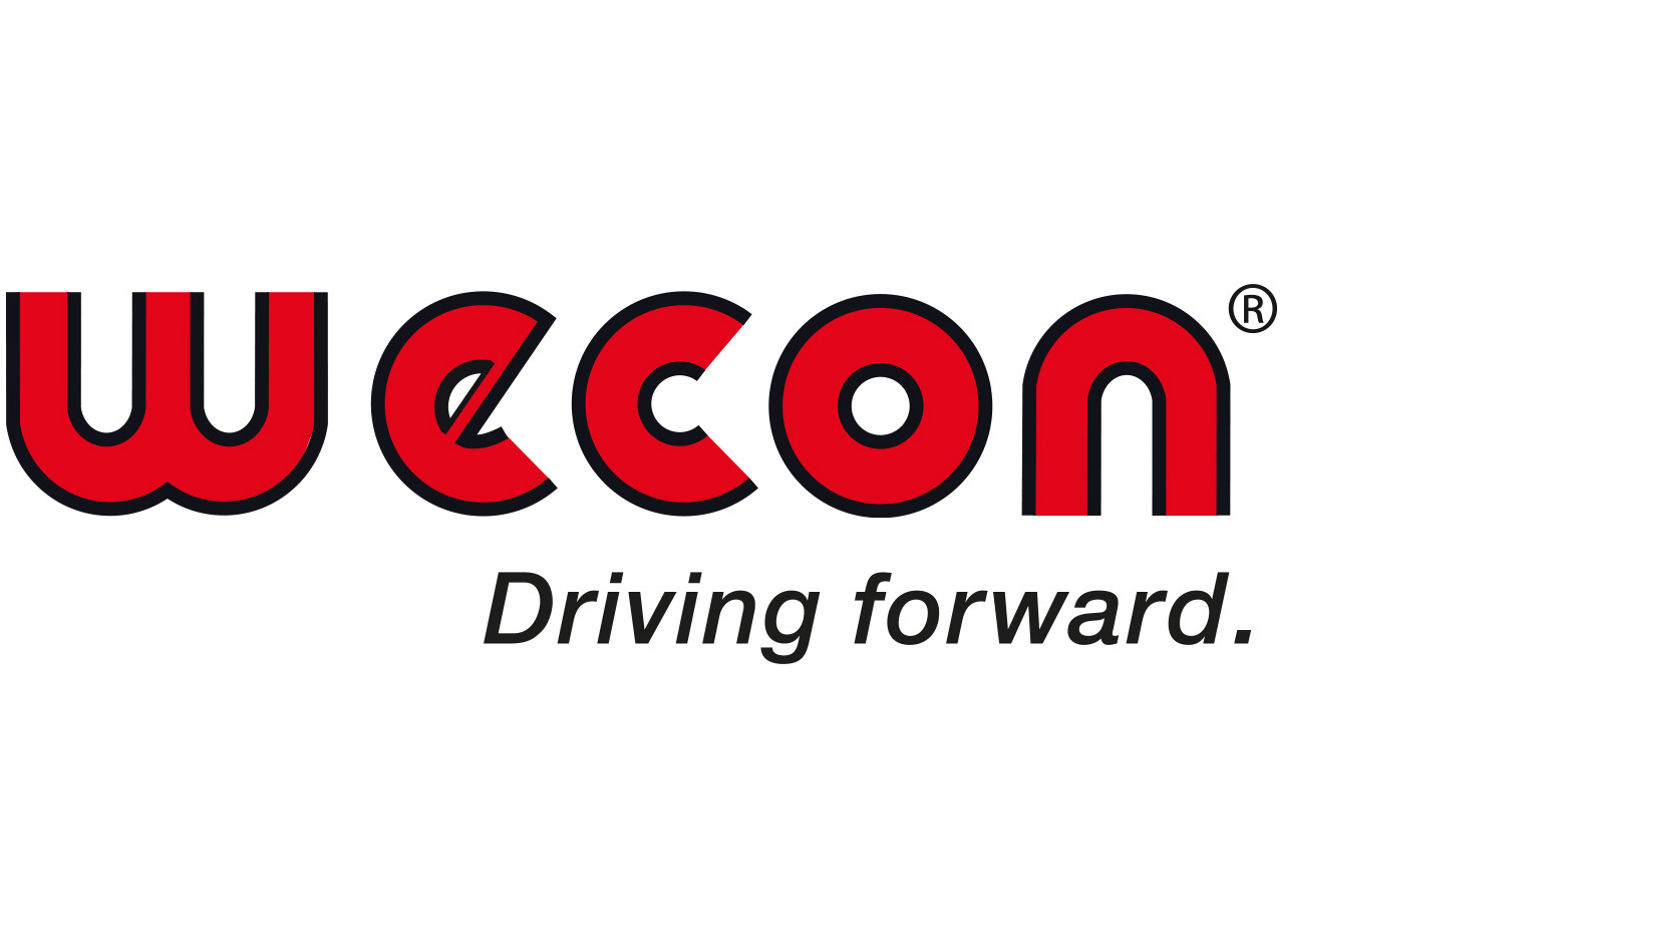 Wecon GmbH